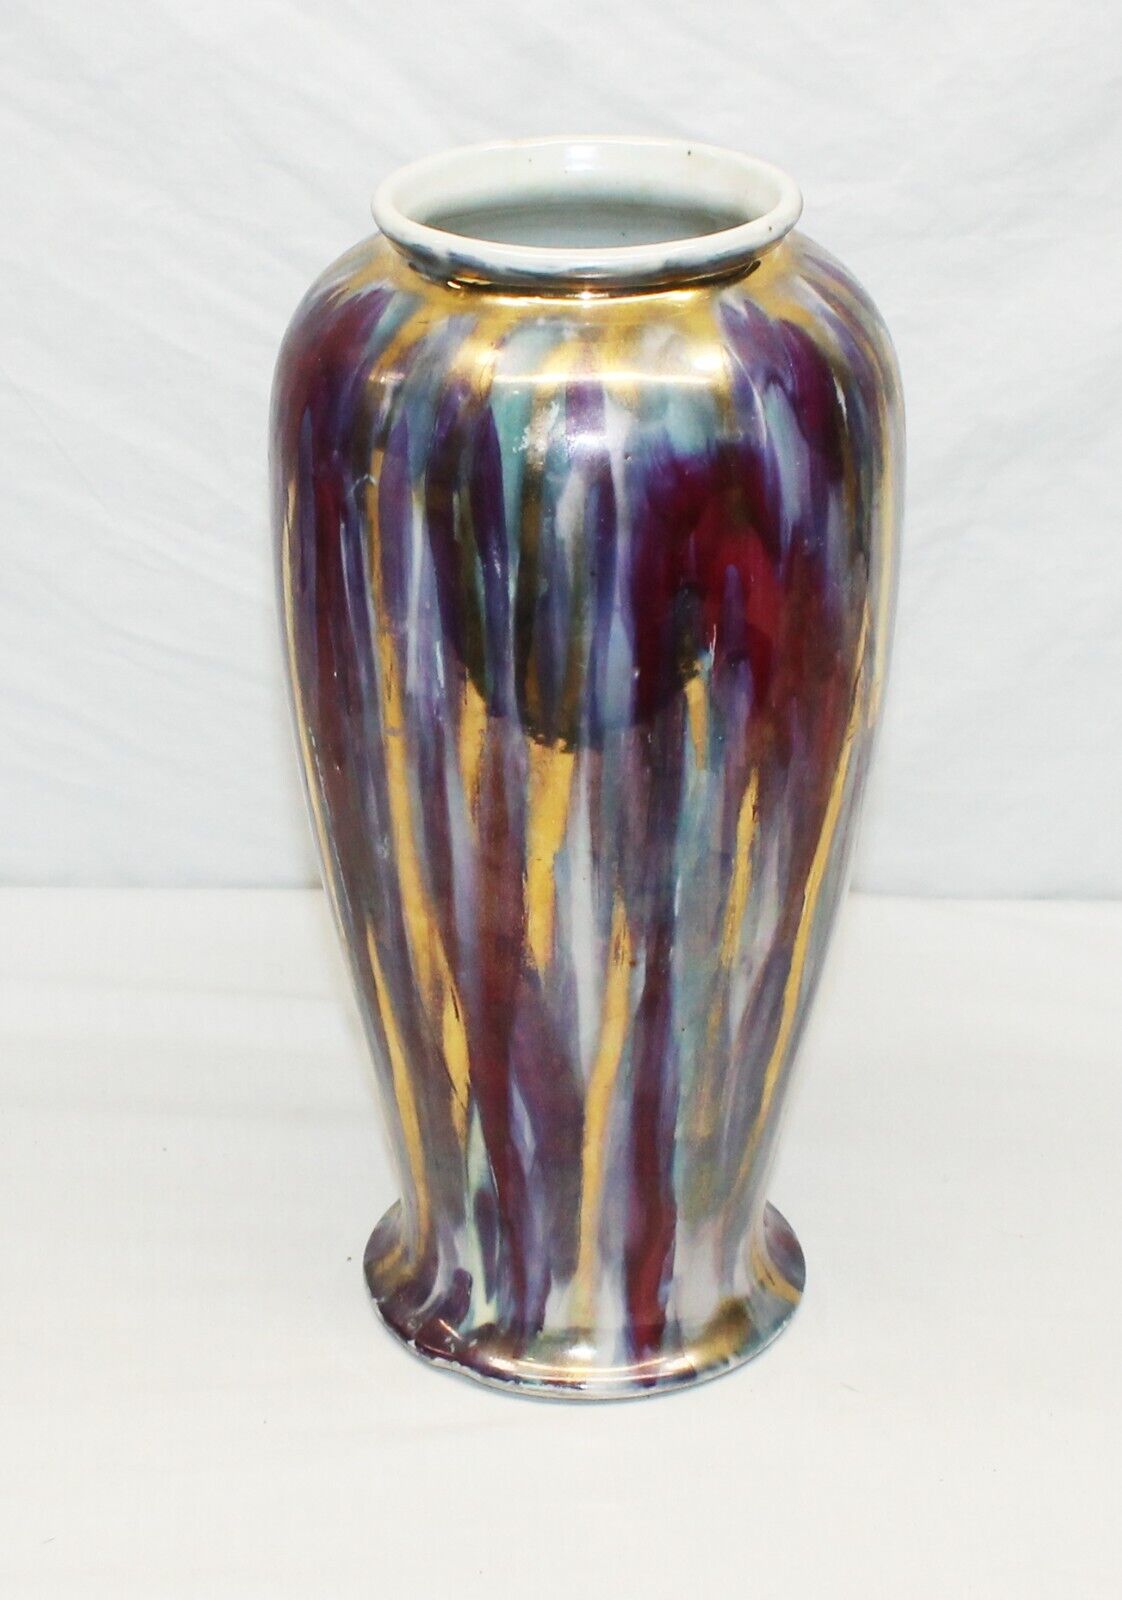 Unique - Japanese Export Vase - Mitsui Bussan Kaisha - Hand Painted - Rare Glaze